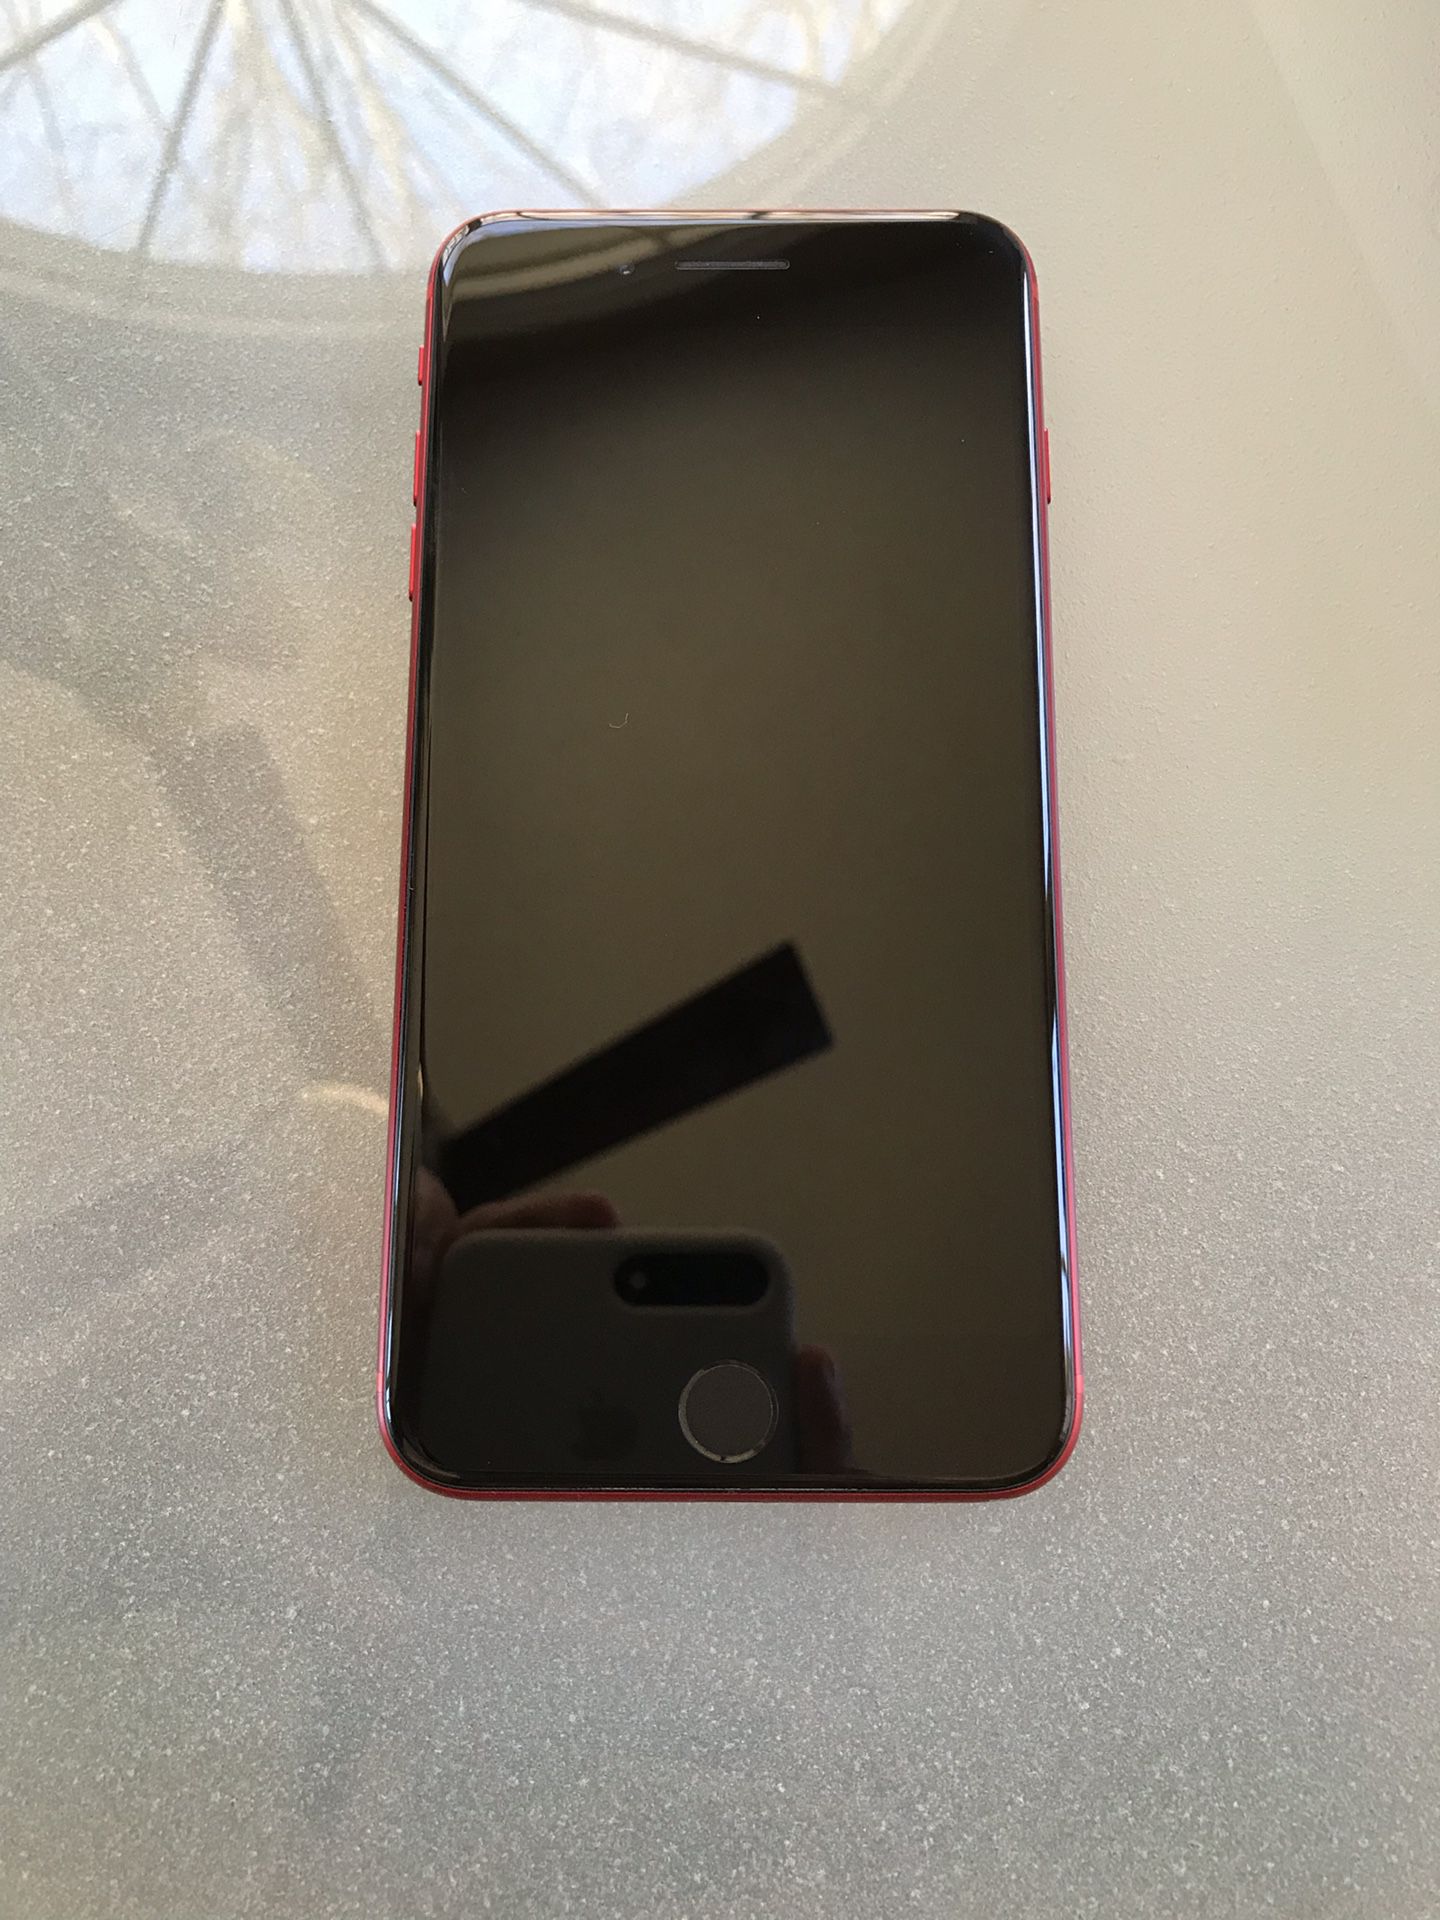 iPhone 8 Plus 256GB PRODUCT RED -Unlocked - Jailbroken